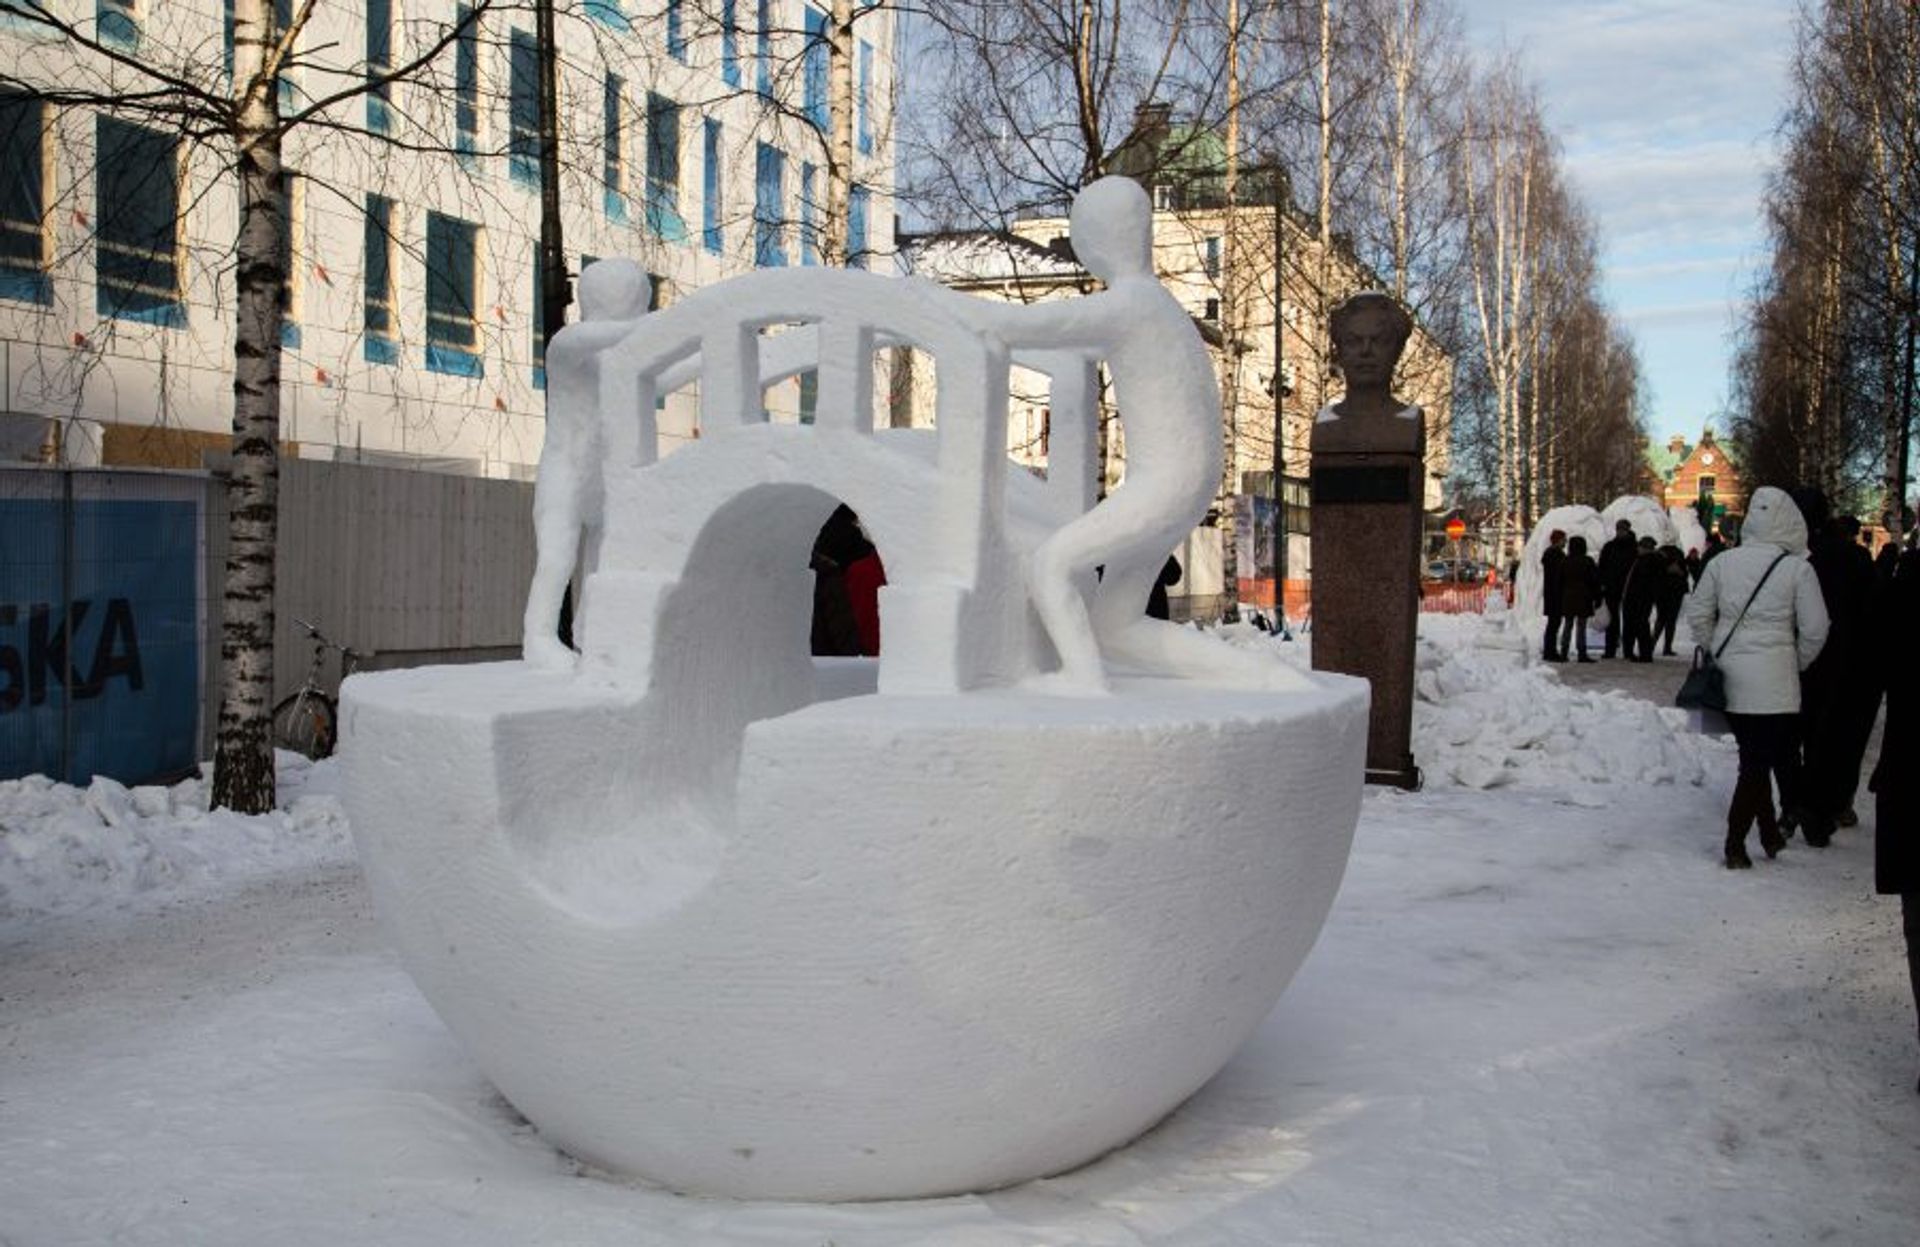 Umeå snow sculpture championship